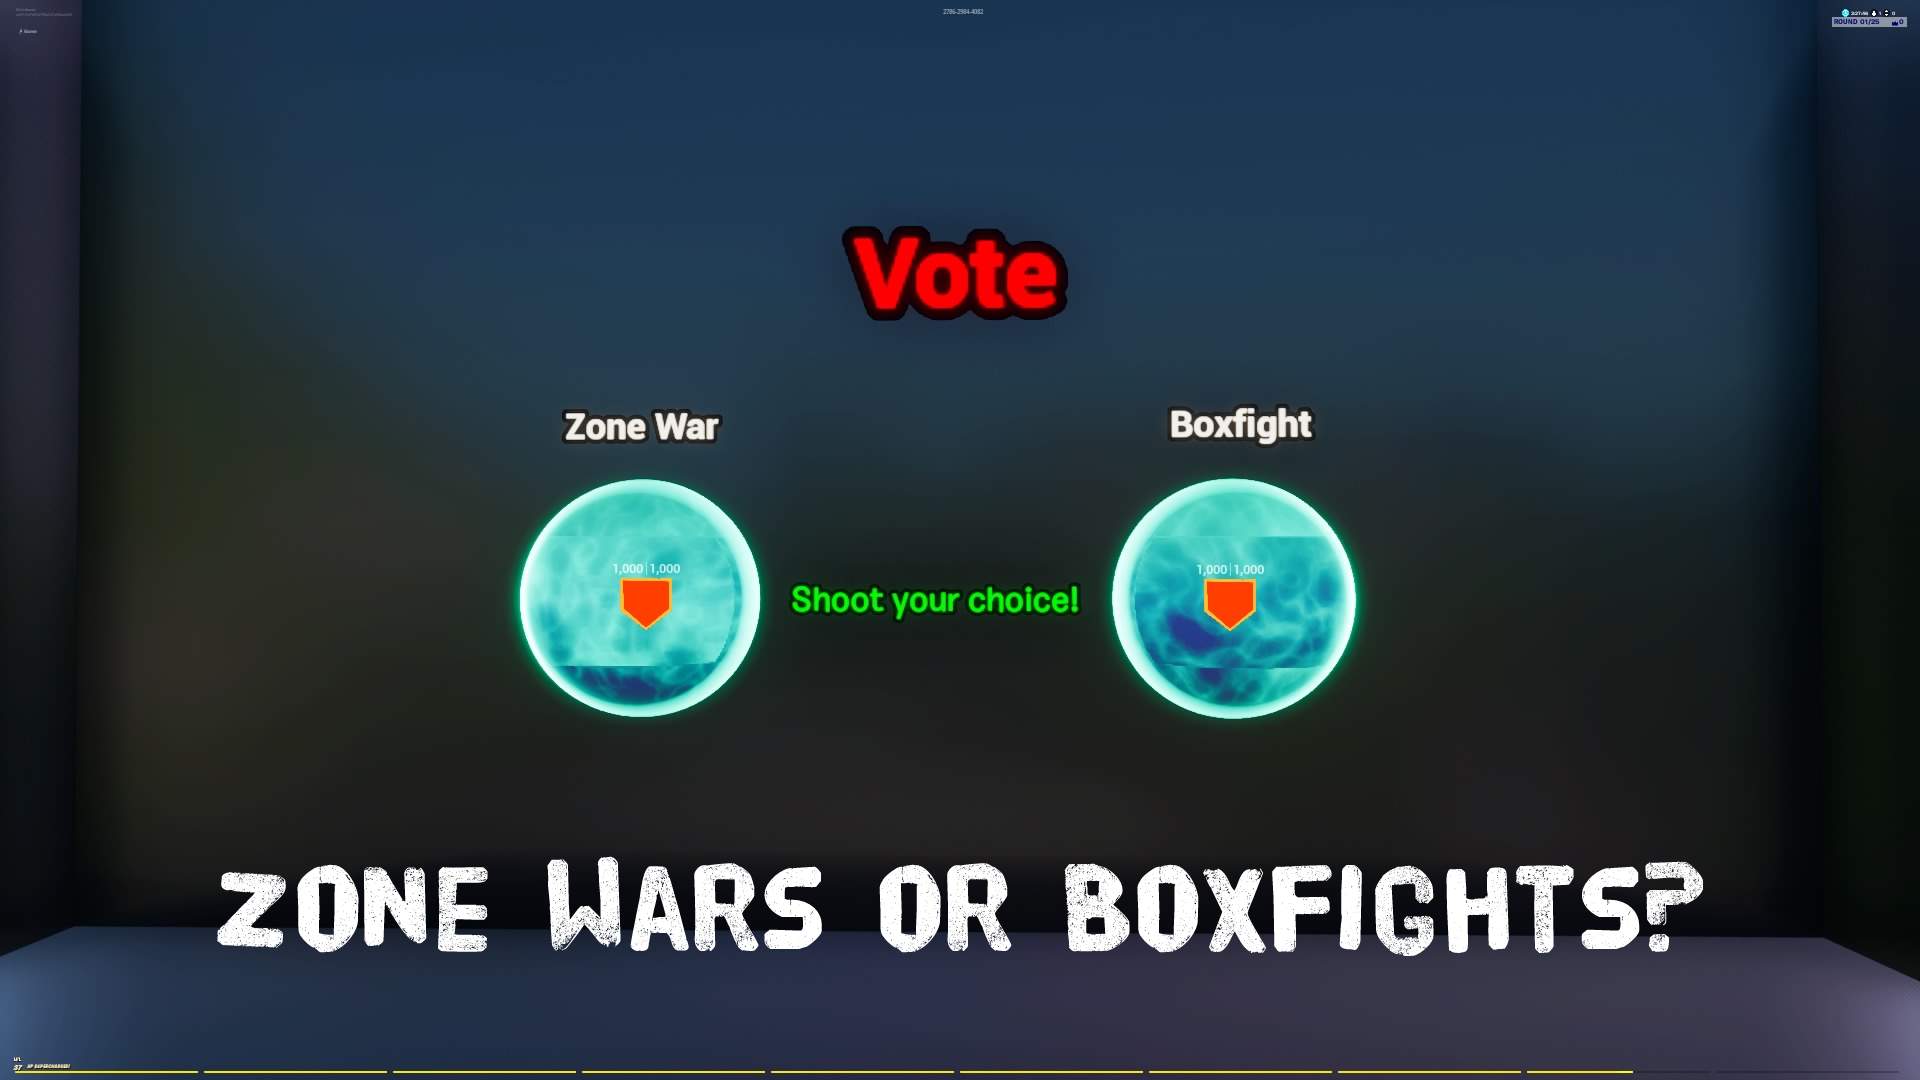 VOTE: BOXFIGHT OR ZONE WARS?